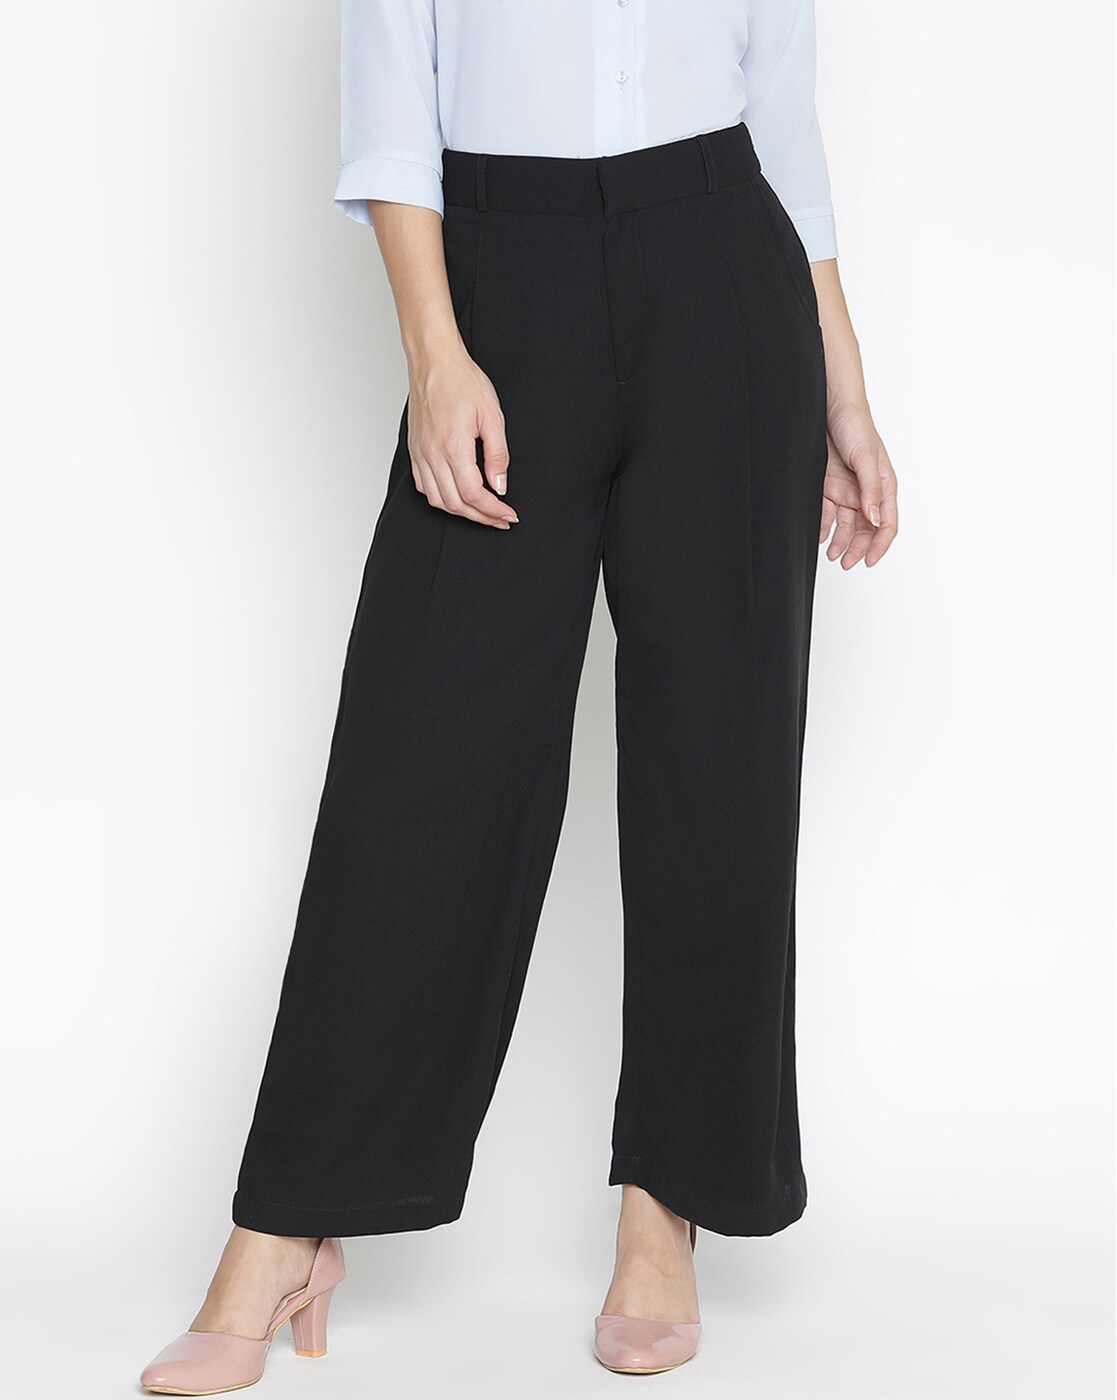 Zara  Pants  Jumpsuits  Zara High Waisted Pants With Darts Blogger Fav   Poshmark